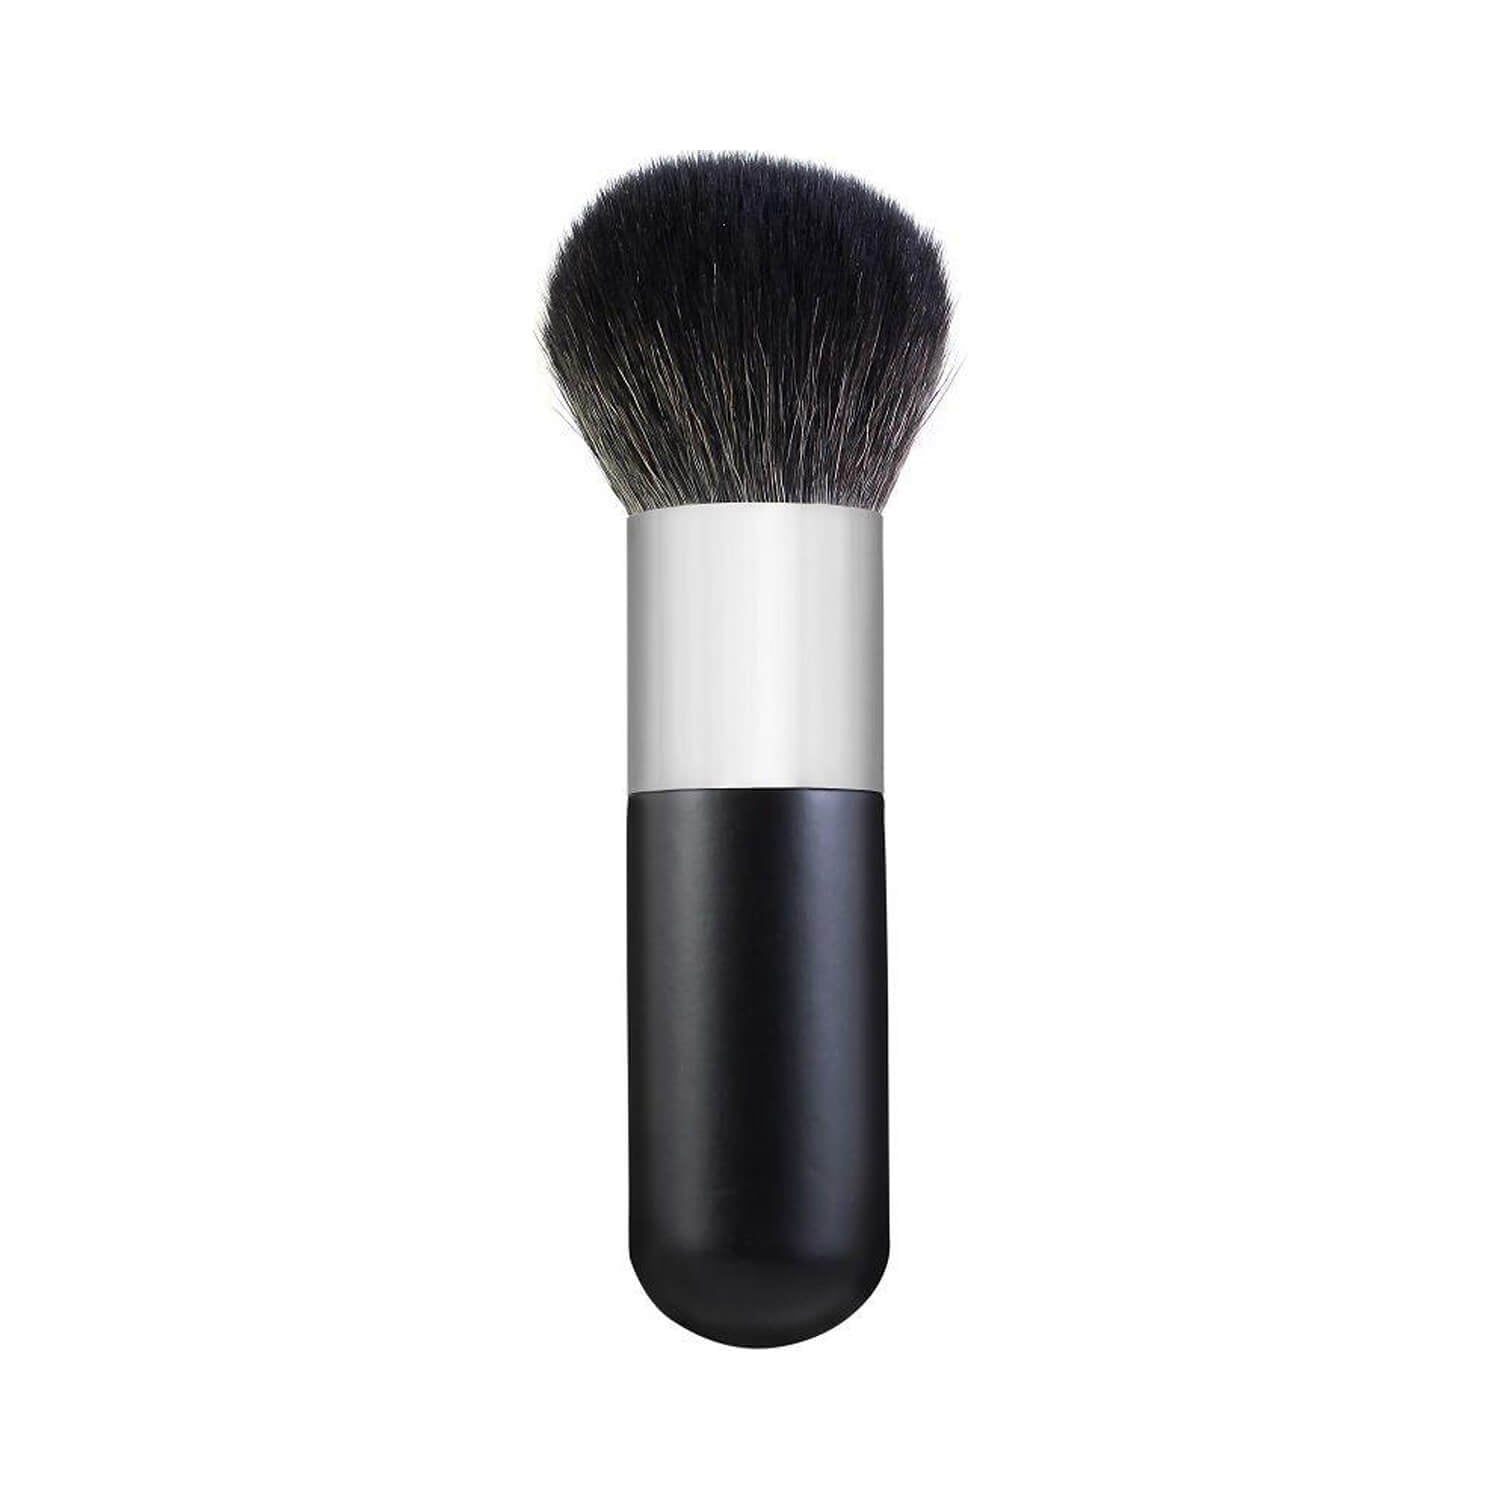 Morphe Cosmetics M463 Deluxe Powder Brush